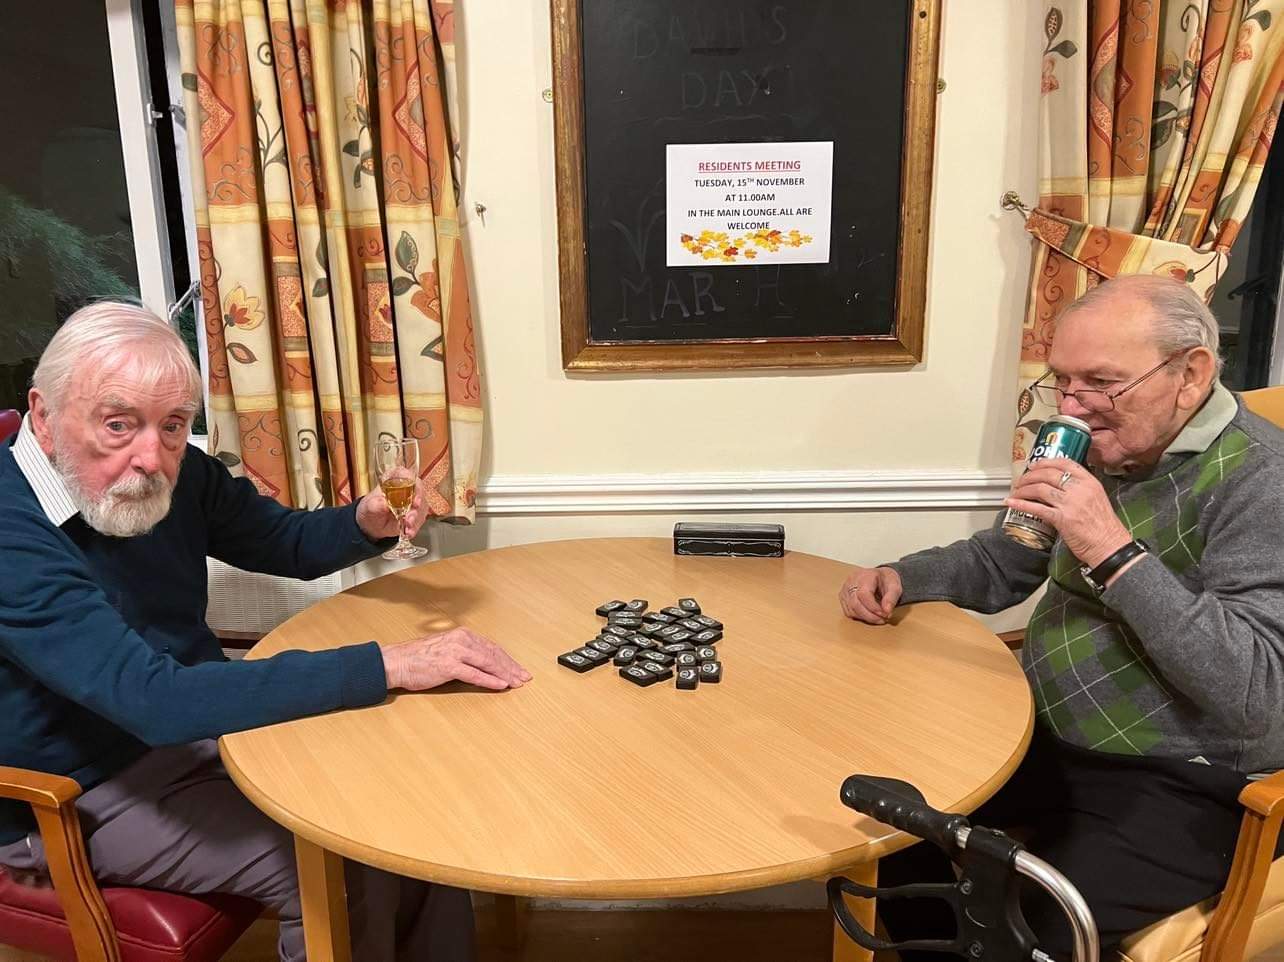 David and Ewan enjoying a drink and dominos game.